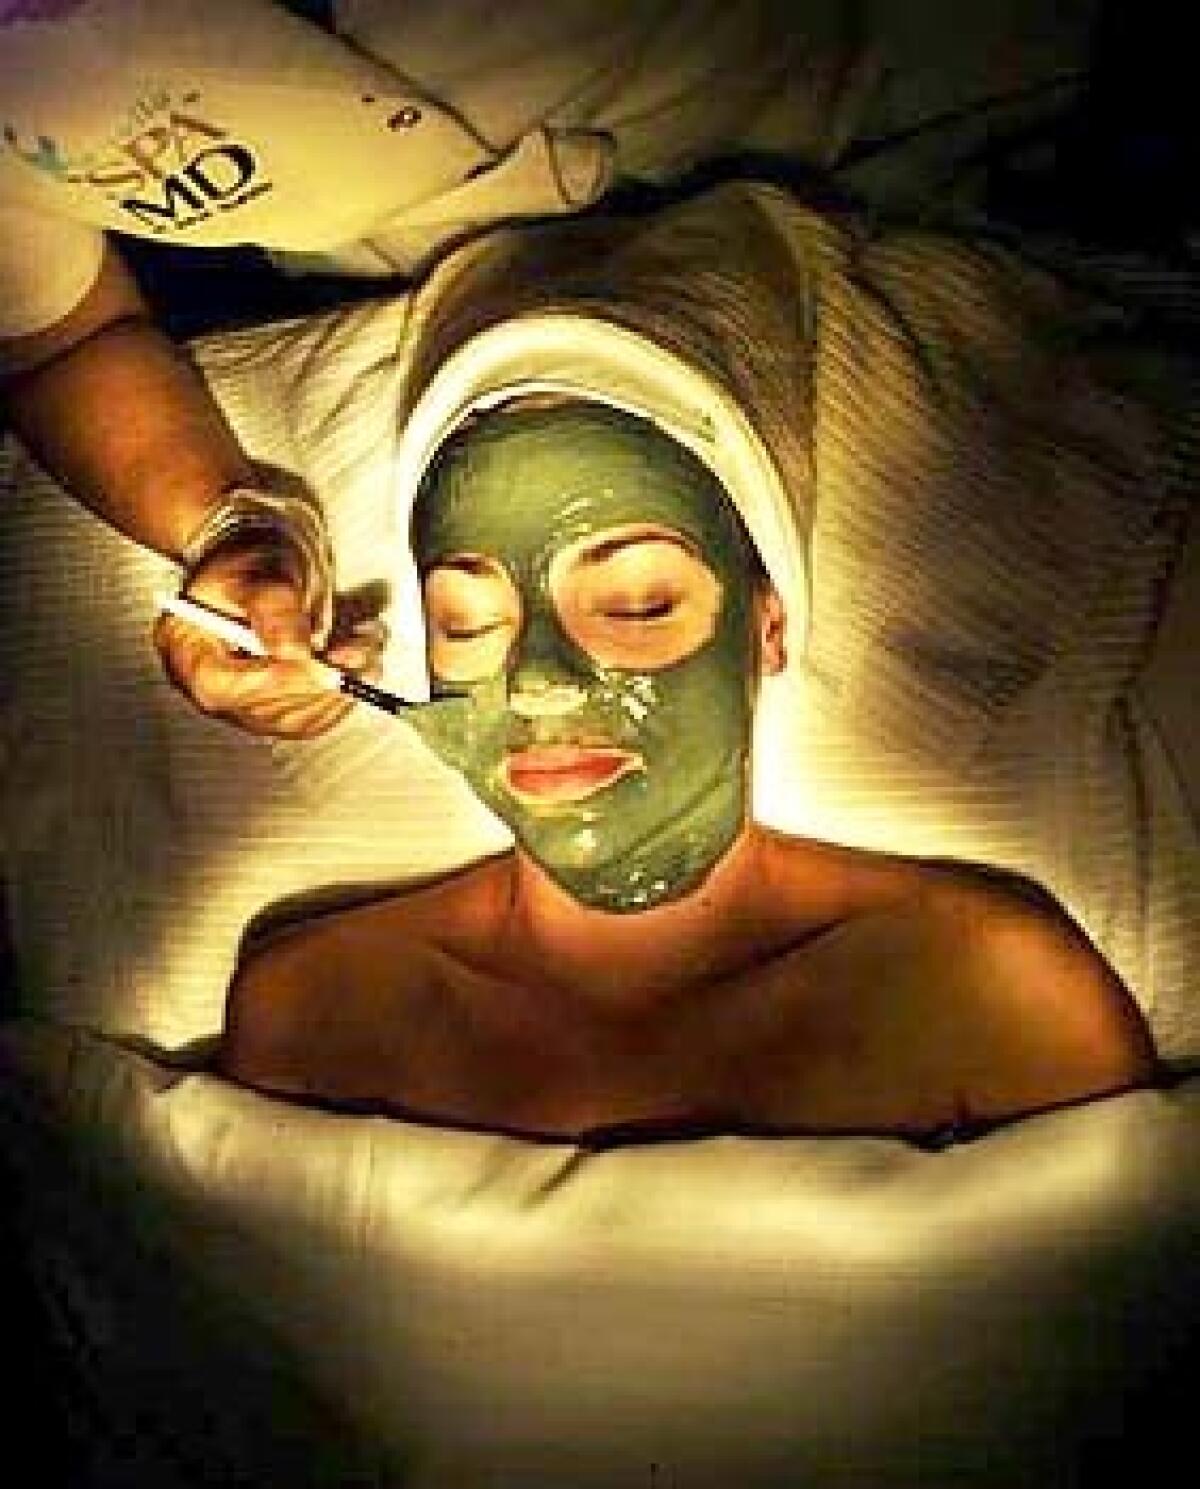 Aesthetician Afi Rowghani applies a mud mask as part of Nina Irigarays facial at Spa MD in La Jolla.